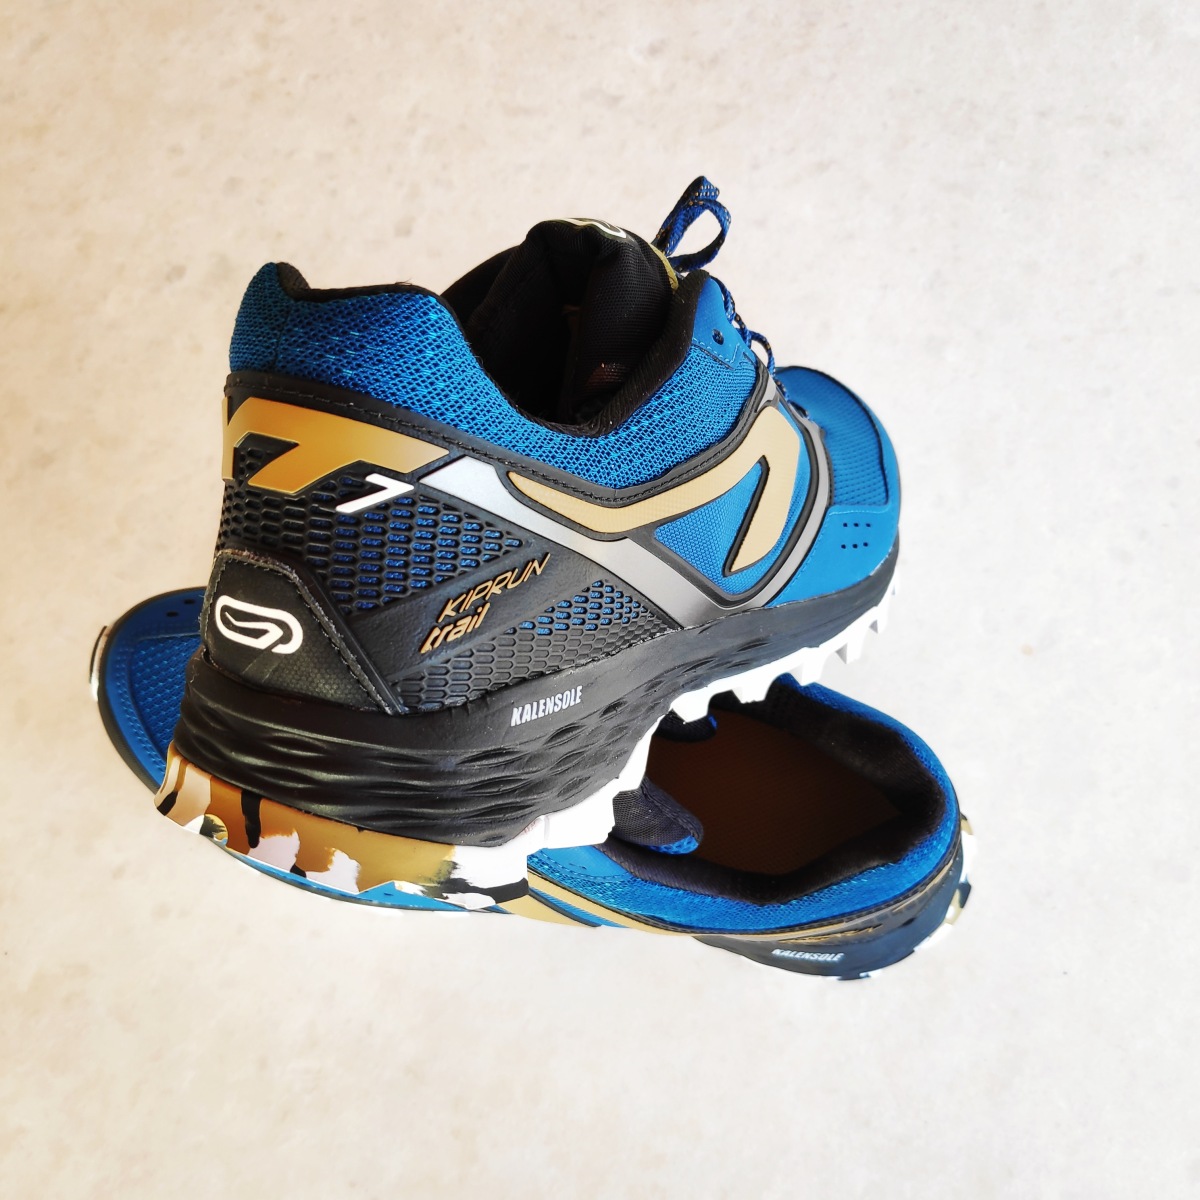 Kalenji Kiprun XT7 Trail running shoes Review – Olympus Mountaineering